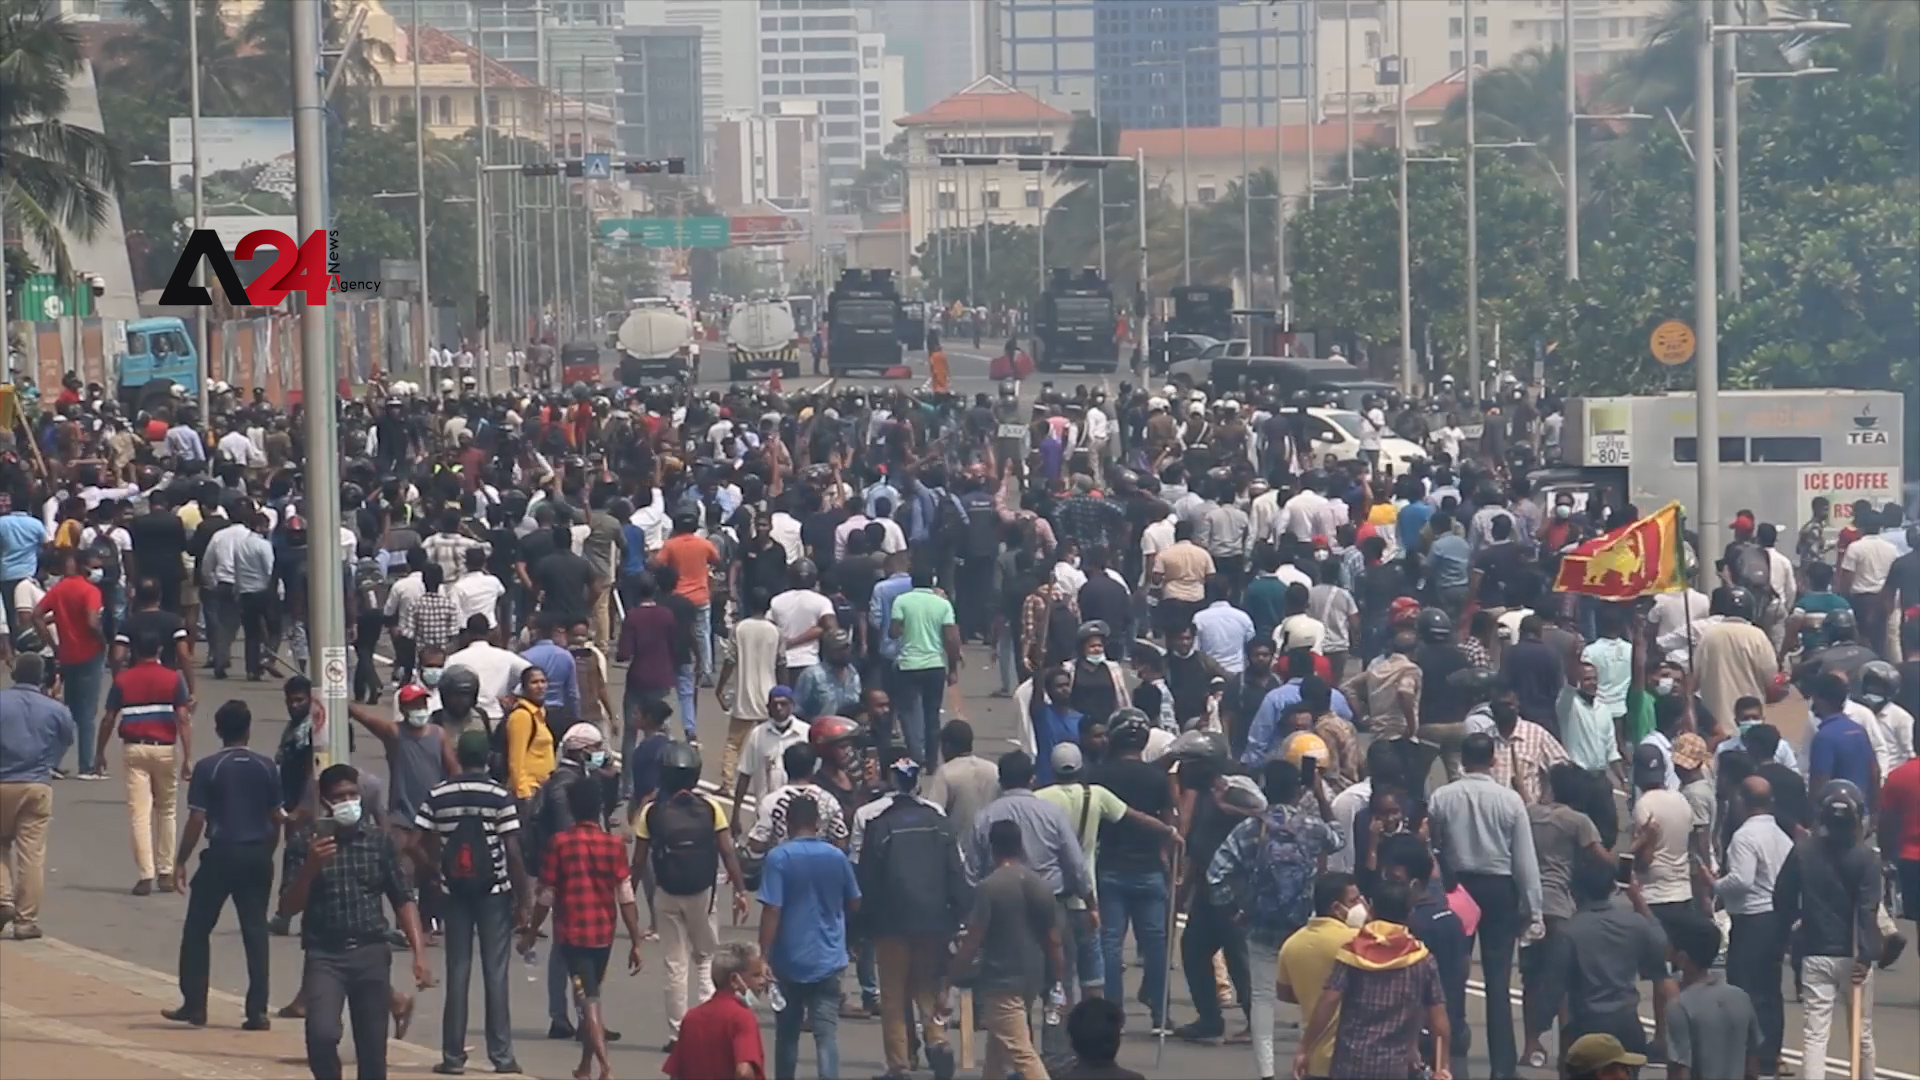 Sri Lanka - Sri Lanka issues shoot-on-sight order to quell unrest